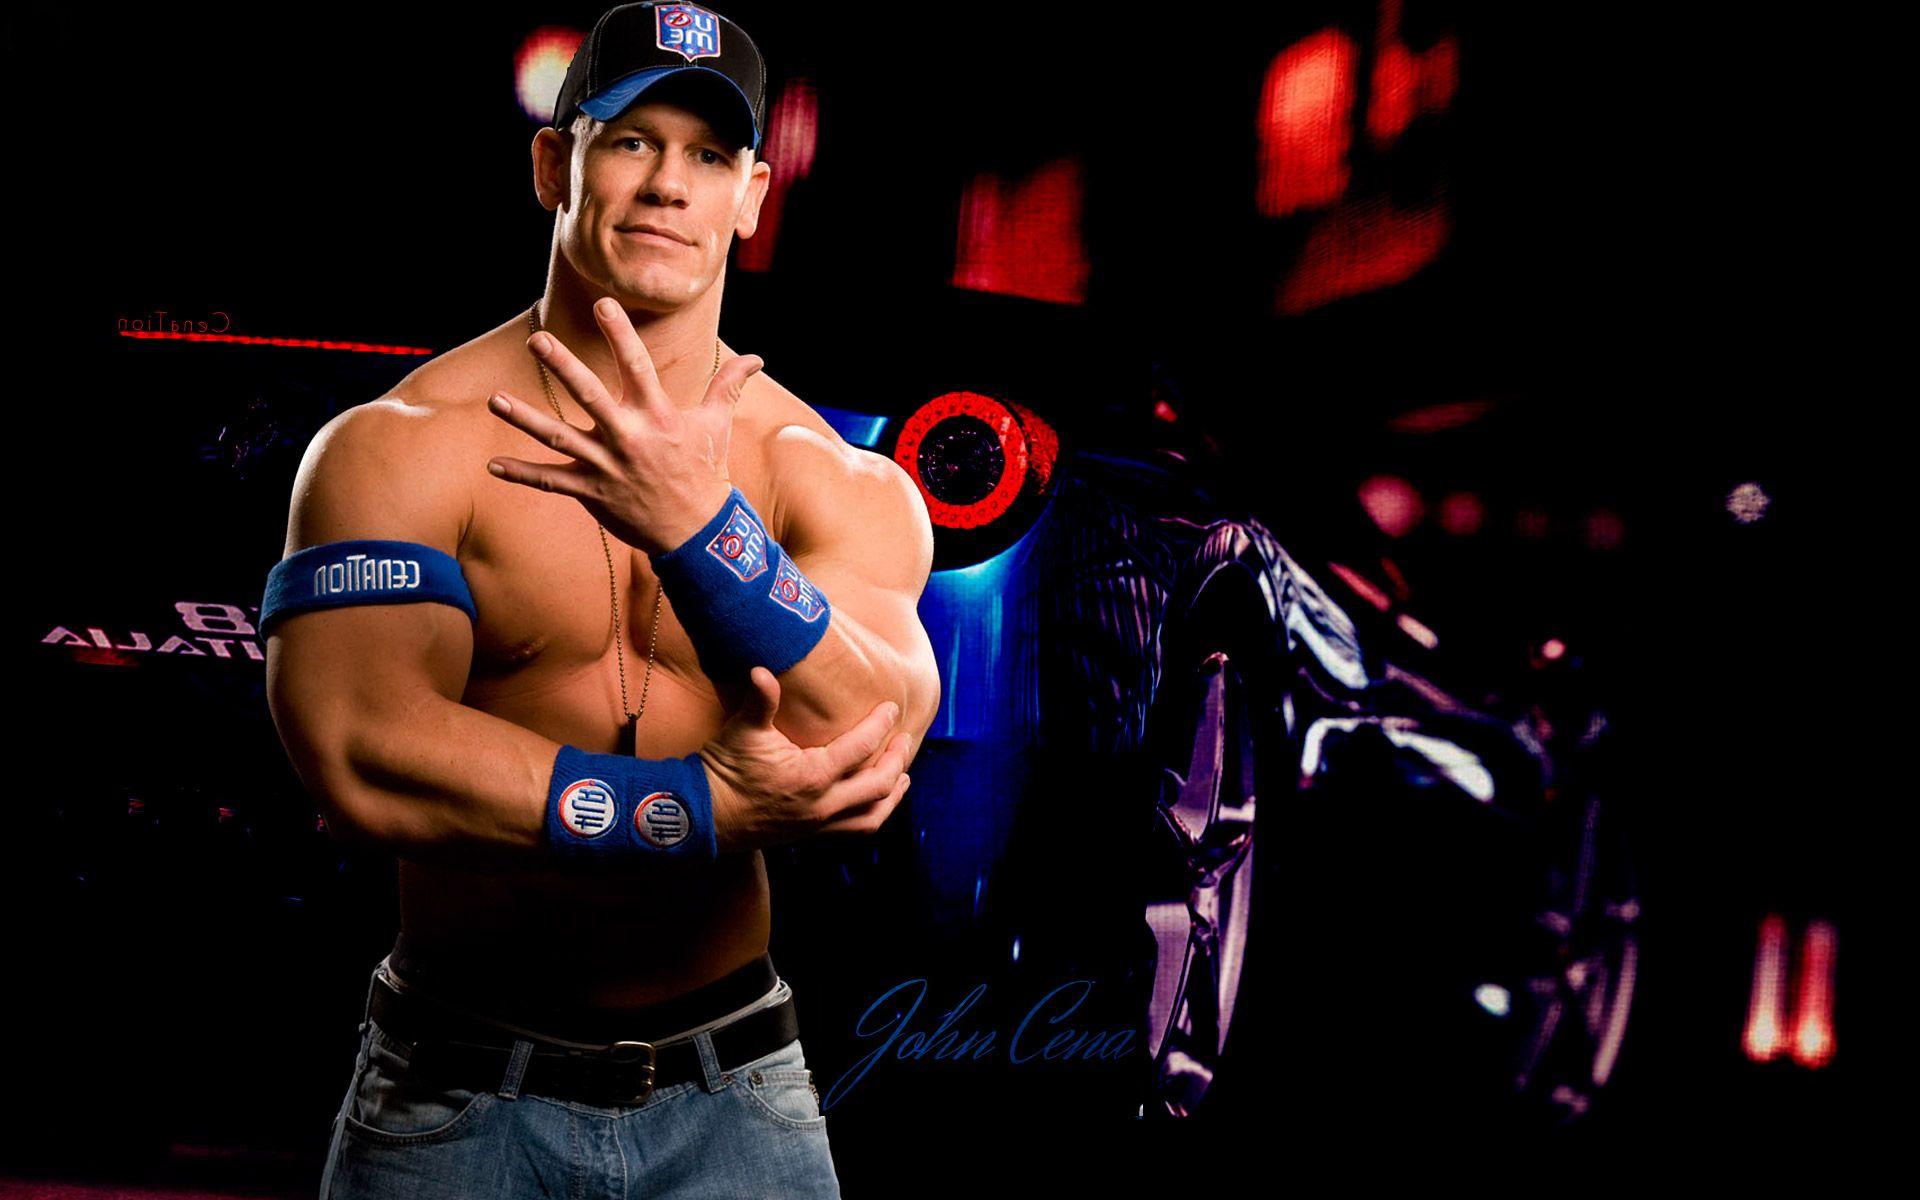 WWE Superstar John Cena Latest HD Wallpaper And New Photo